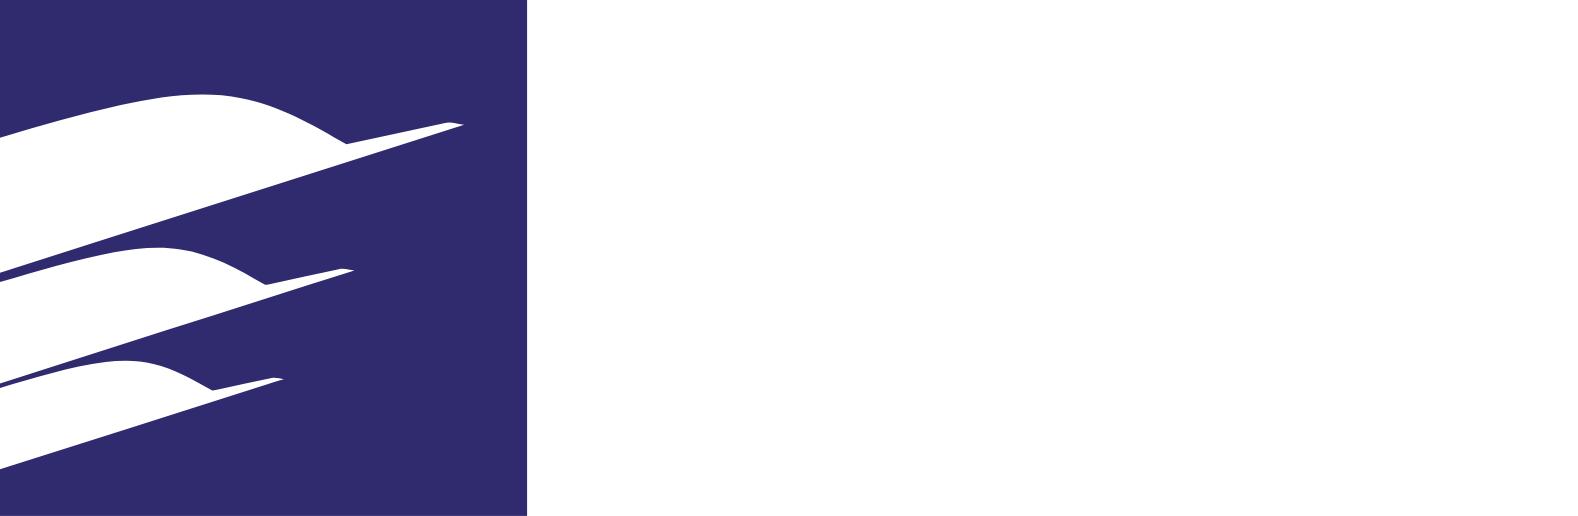 ALAFCO Aviation Lease and Finance Company Logo groß für dunkle Hintergründe (transparentes PNG)